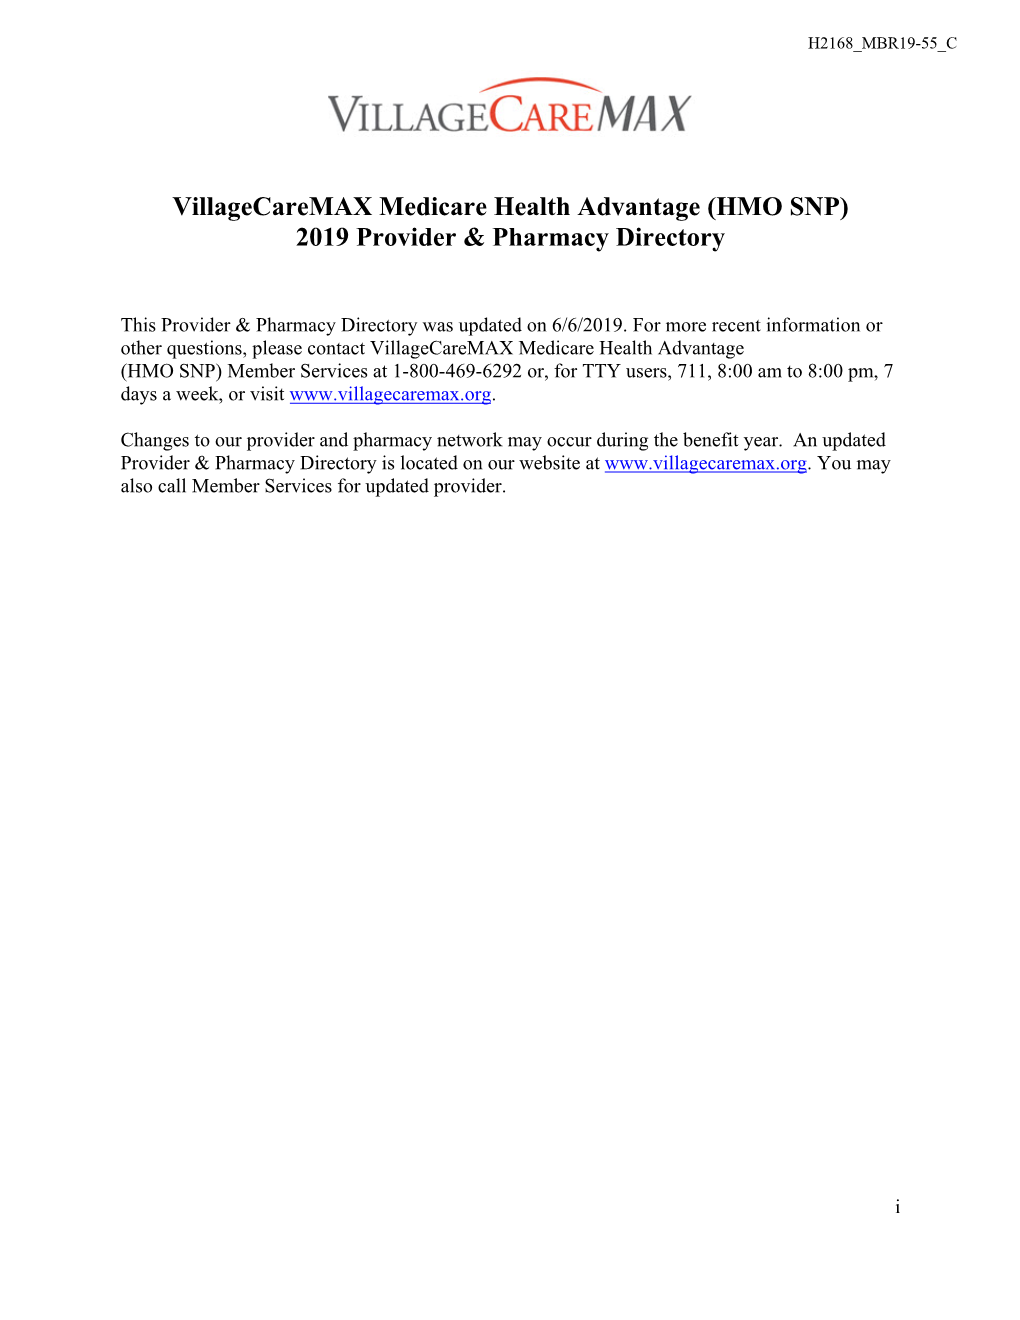 Villagecaremax Medicare Health Advantage (HMO SNP) 2019 Provider & Pharmacy Directory